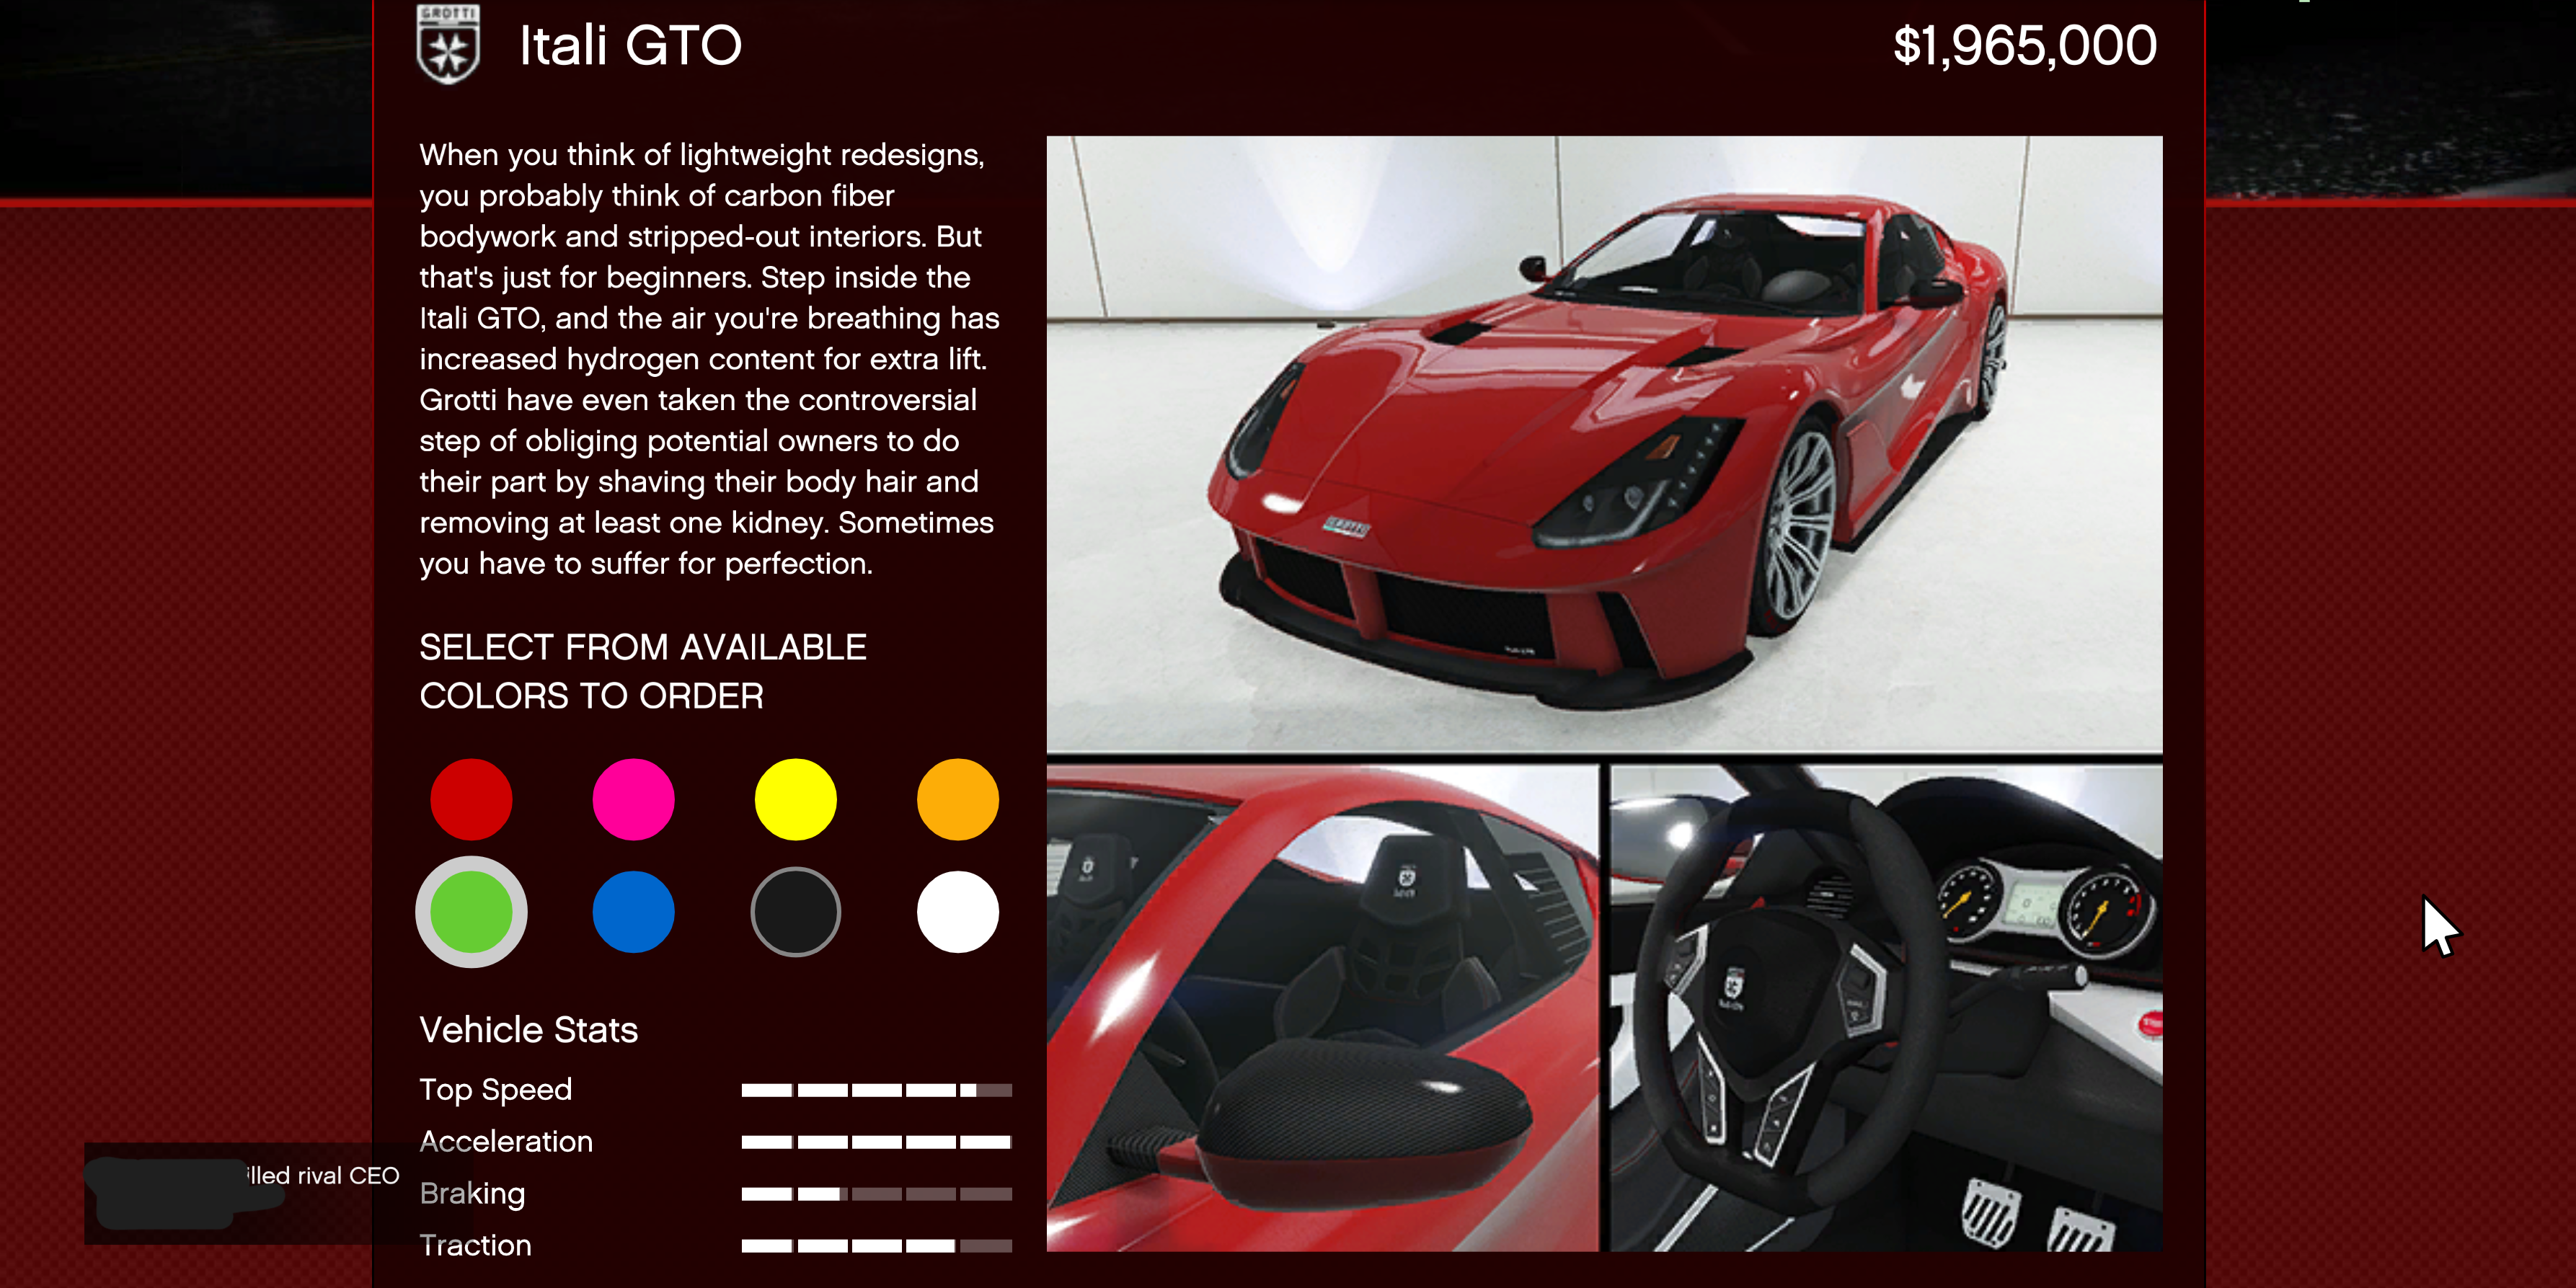 A Red Grotti Itali GTO for sale in GTA Online